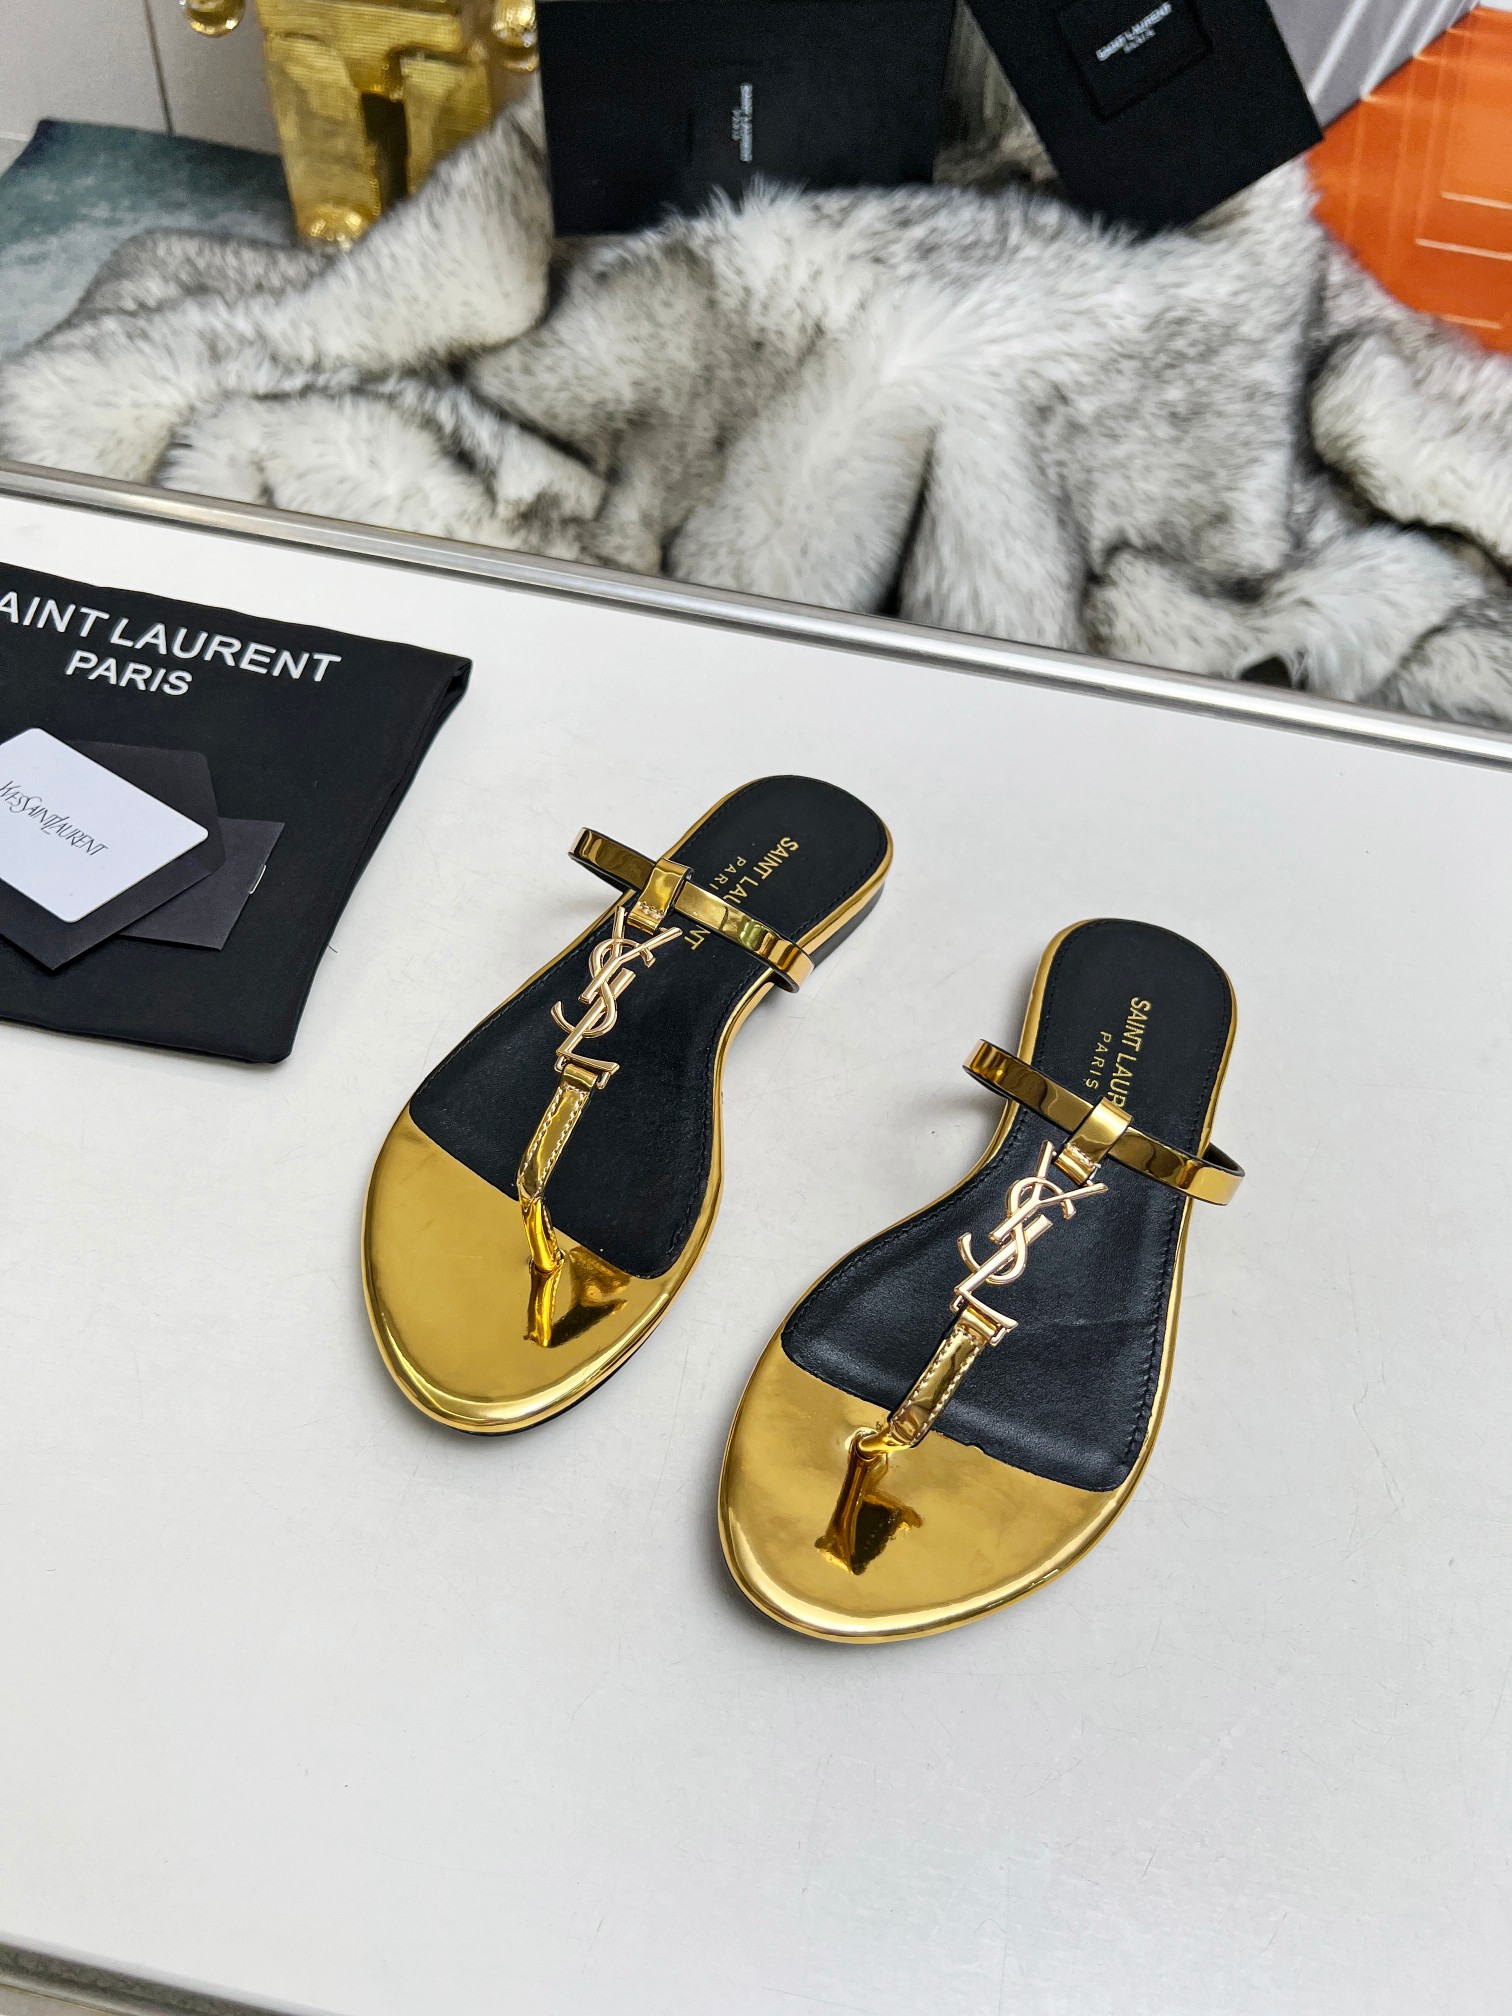 Yves Saint Laurent Am besten
 Schuhe Badelatschen Gold Hardware Rindsleder Schaffell